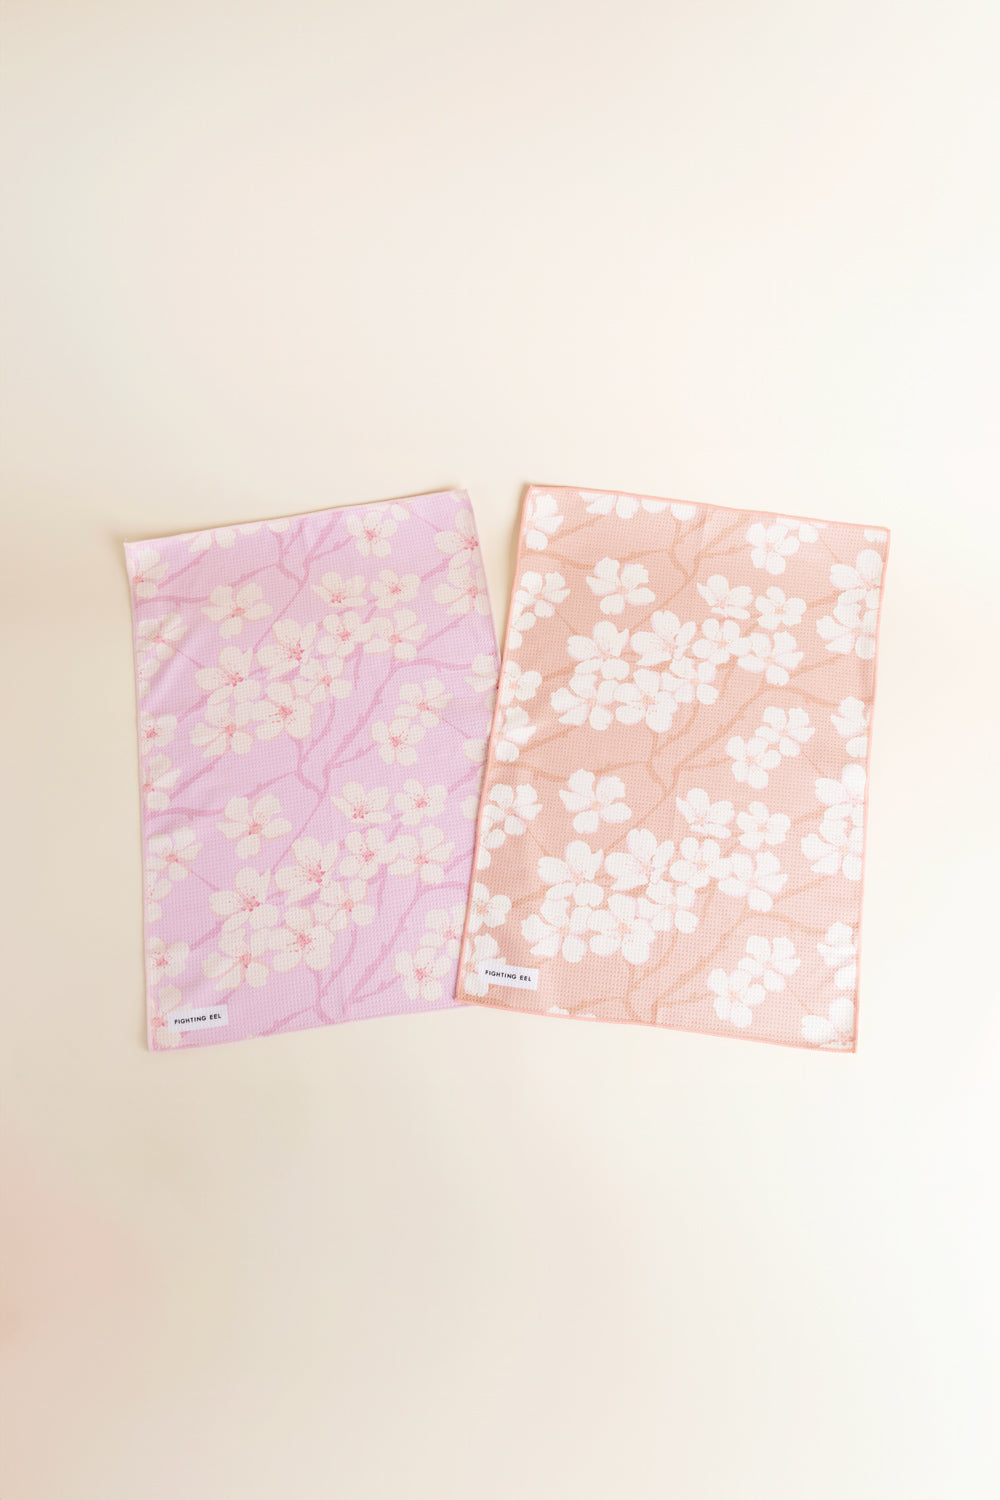 Multipurpose 2 Pack - Coral Sand/Orchid Sakura